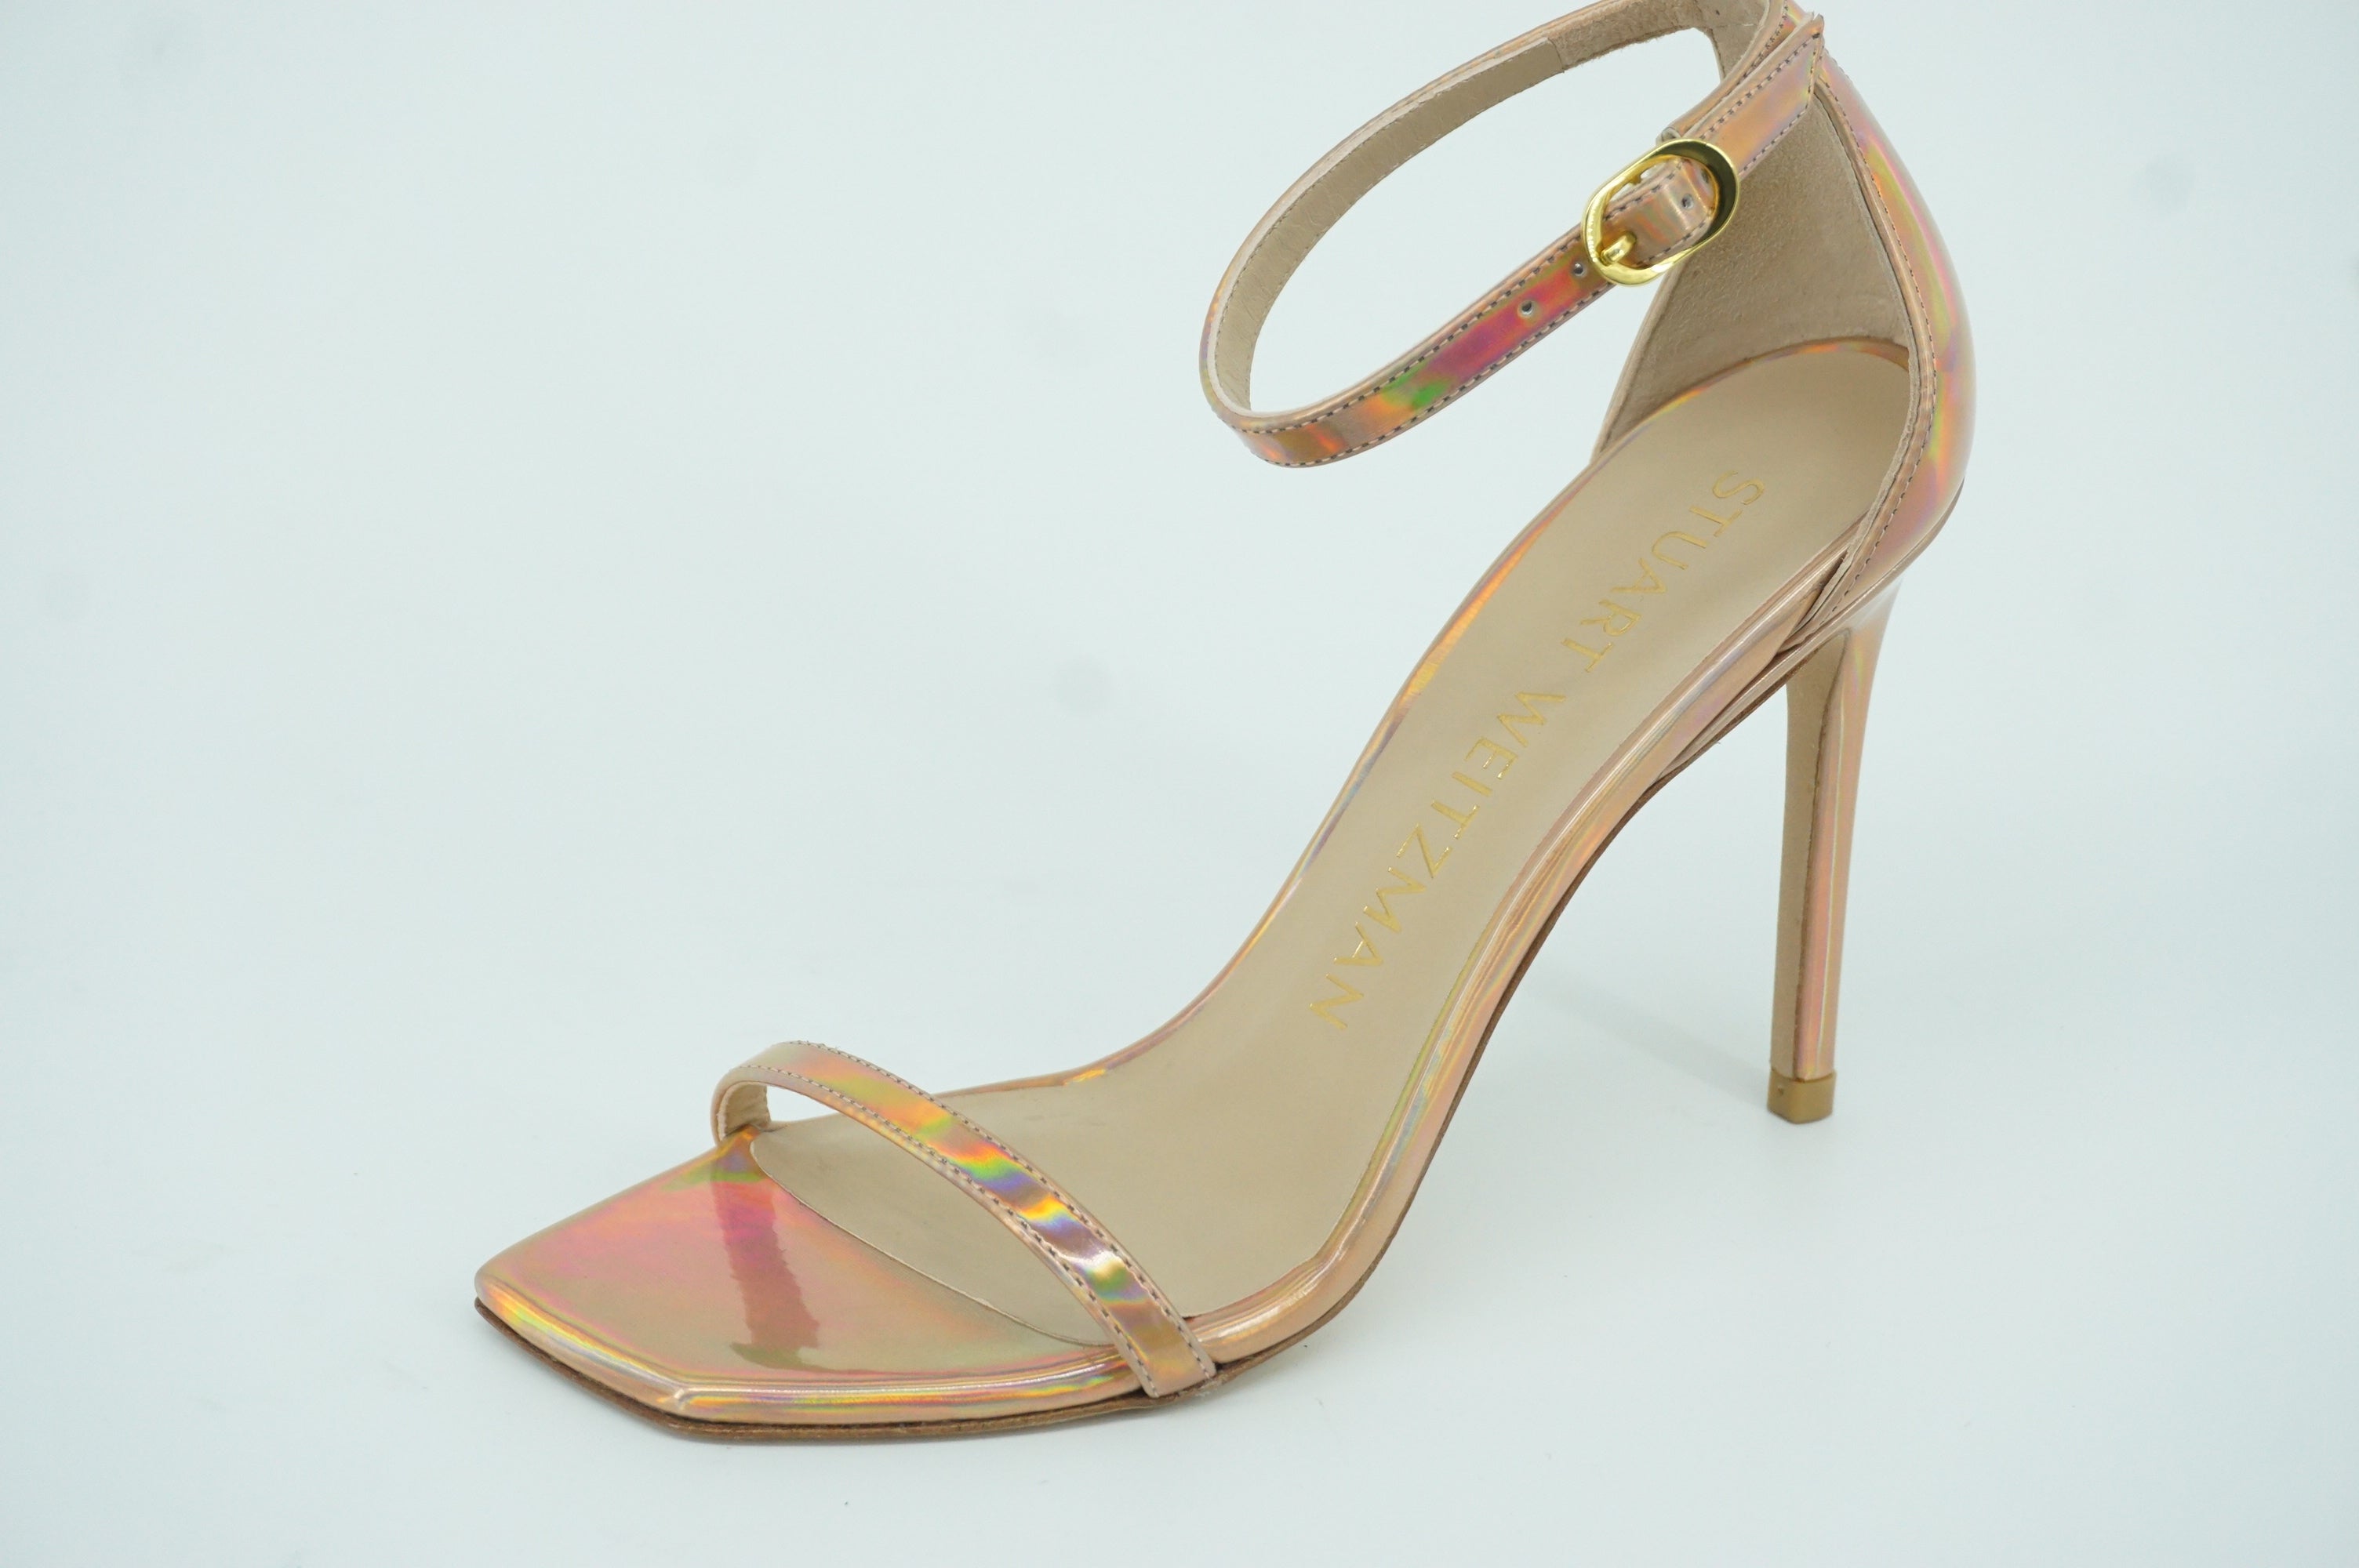 Stuart Weitzman Nudistcurve 100 Hologram Ankle Strappy Sandals Size 7 $475 pink